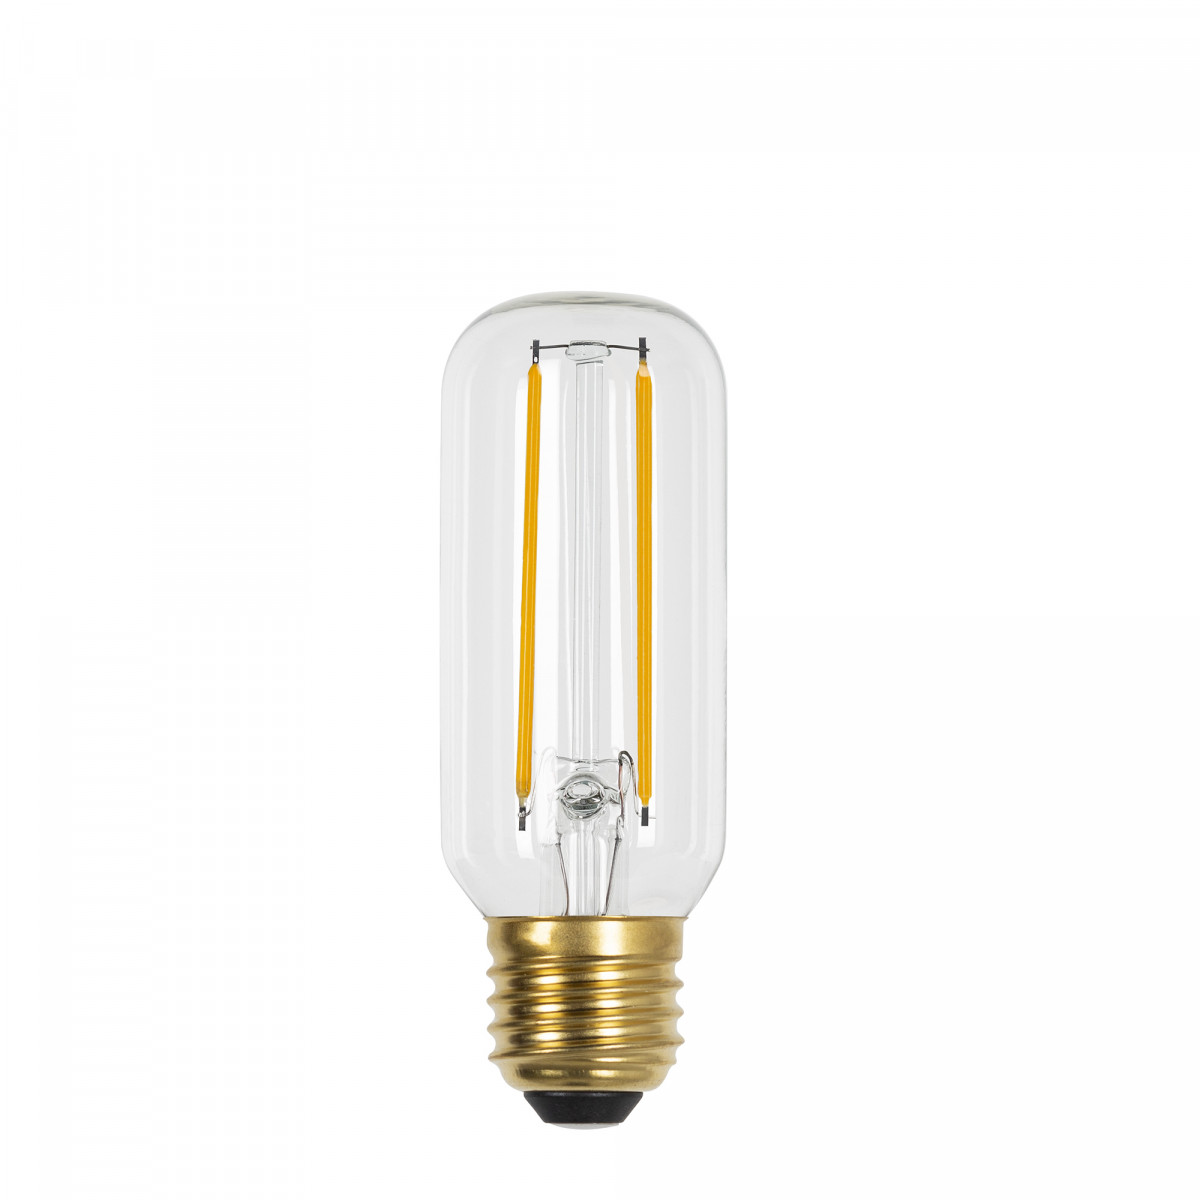 Ampoule tube Classic Gold LED 2W (3855)